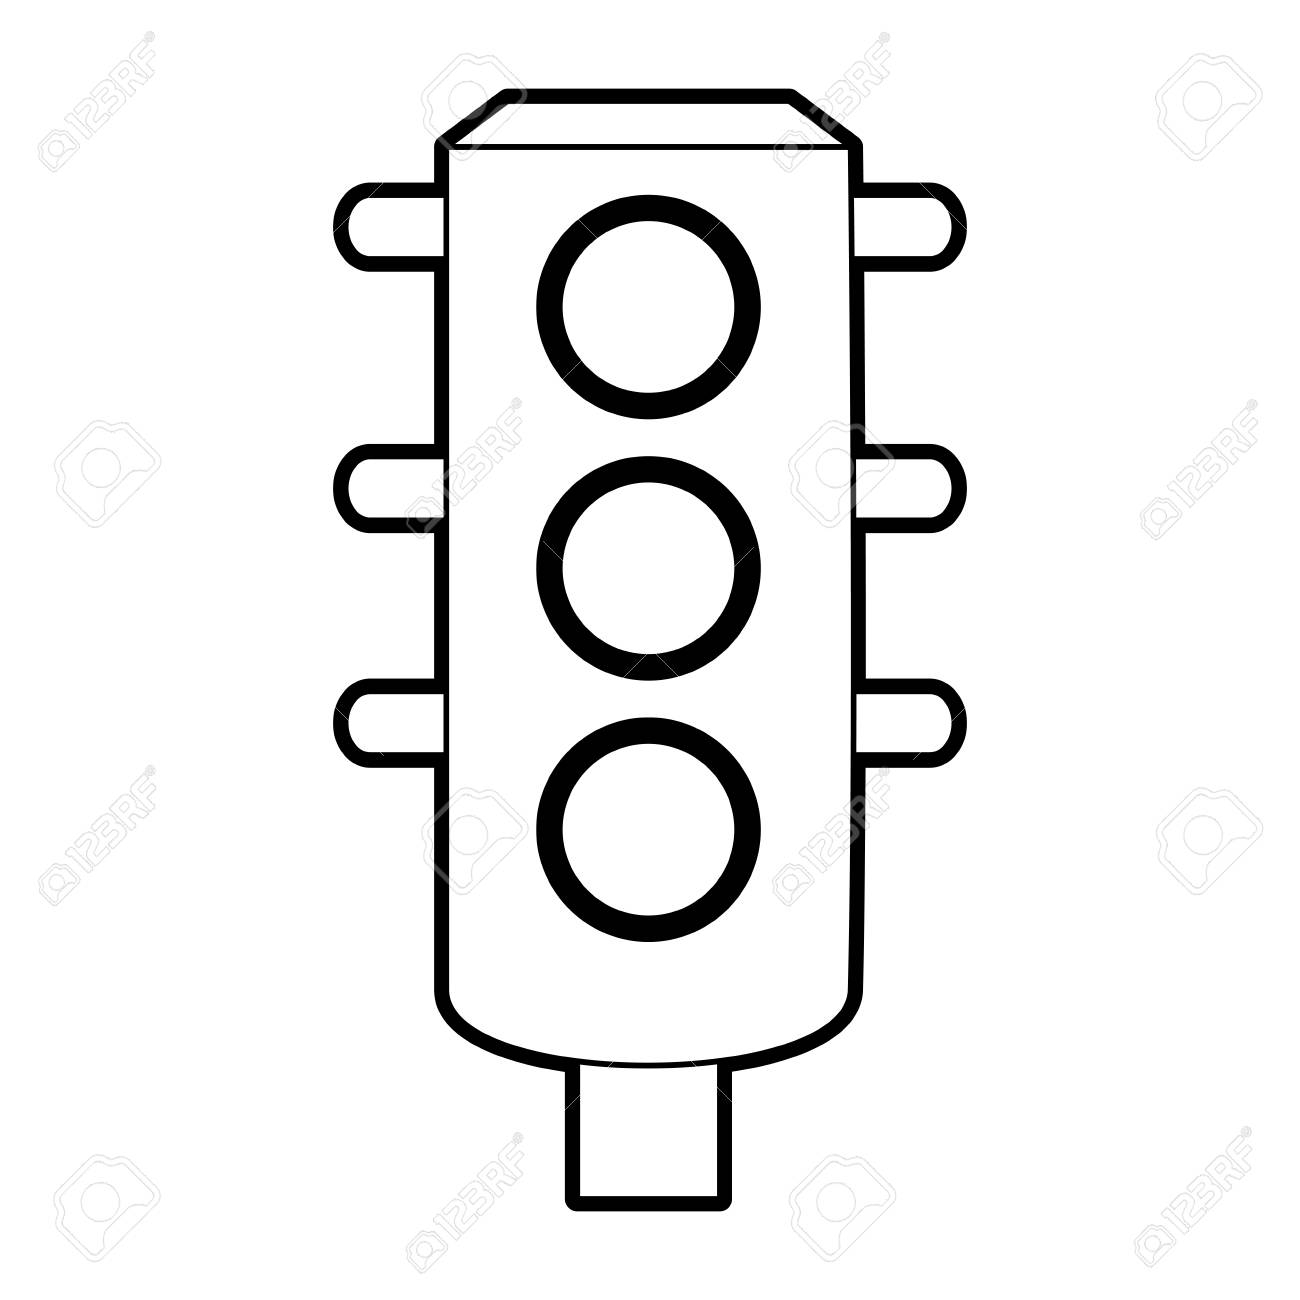 Traffic light for preschoolers #16